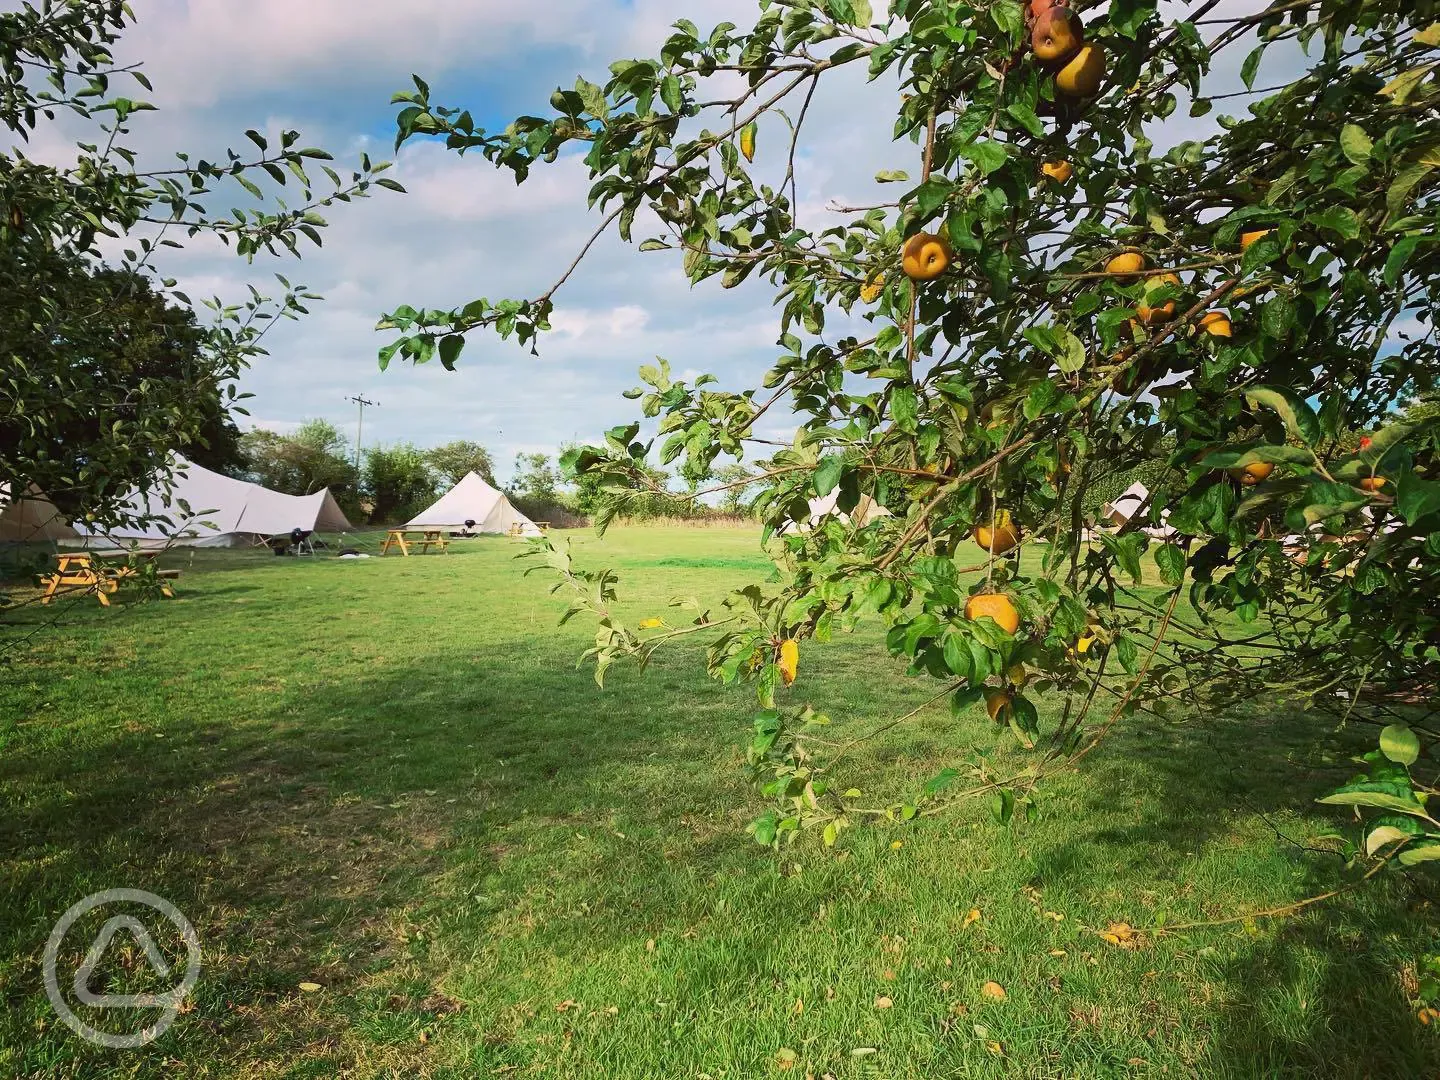 Bell tent through apple trees